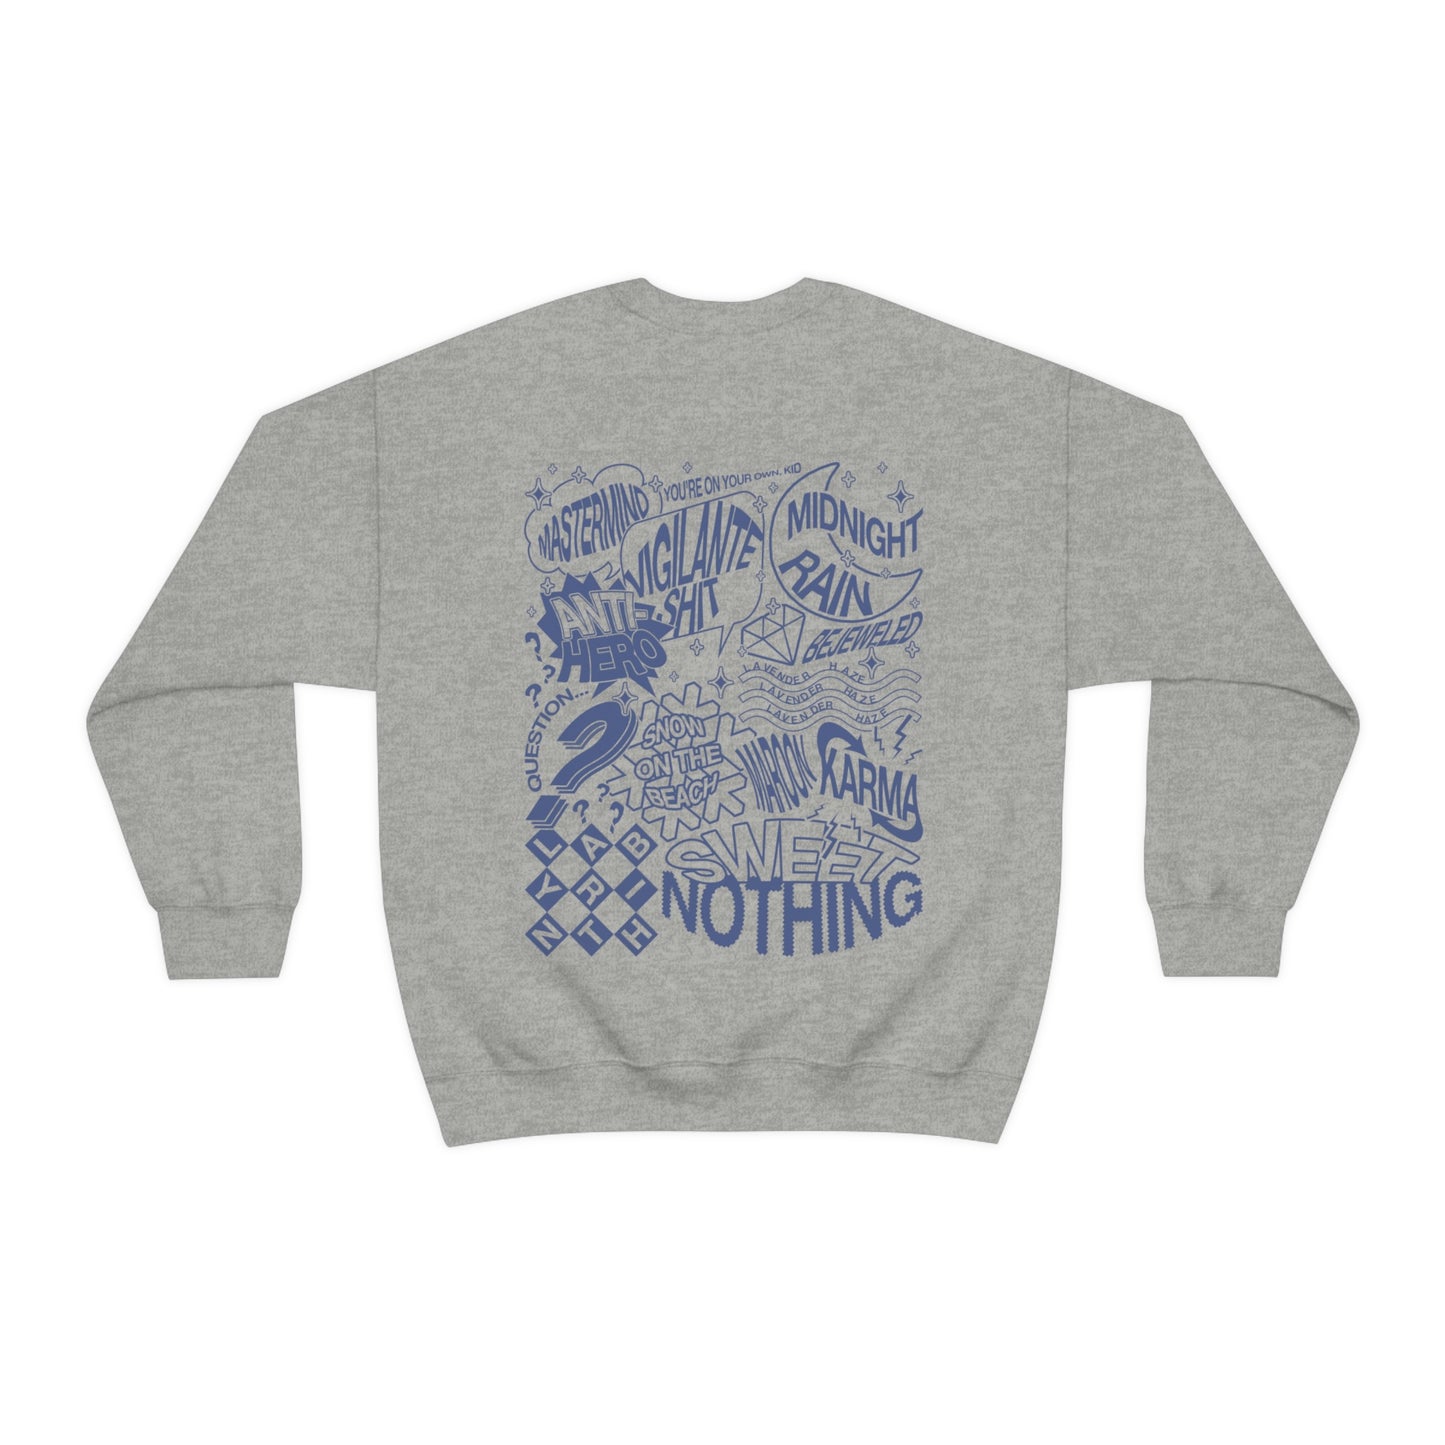 Midnights Sweatshirt, 2 Sided Print